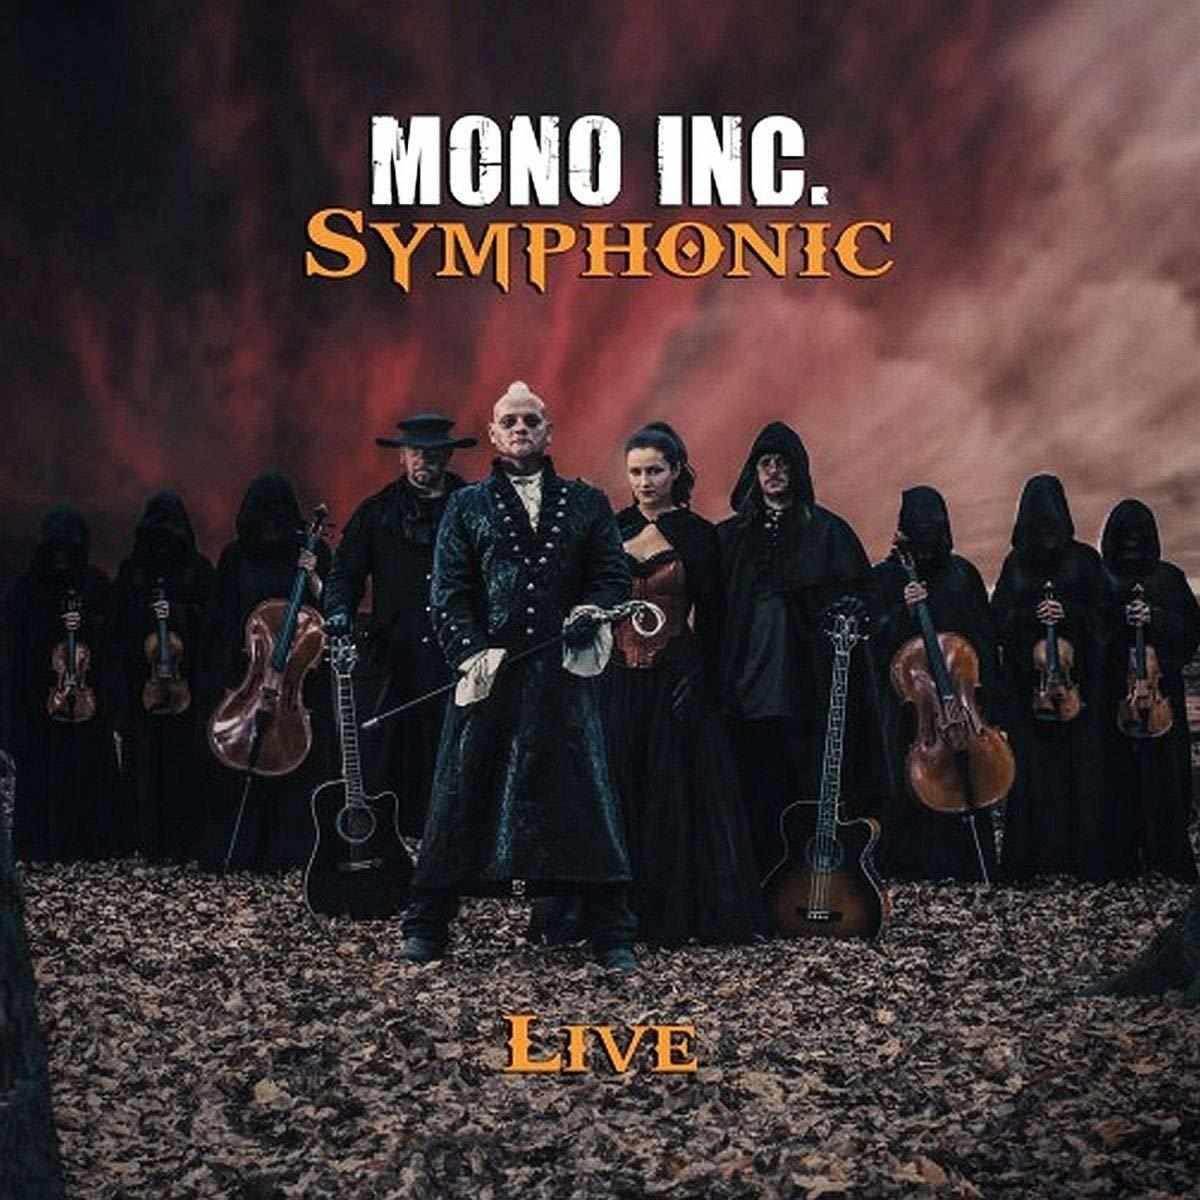 Video) - + - Symphonic Inc. Live (CD Ltd. DVD Mono